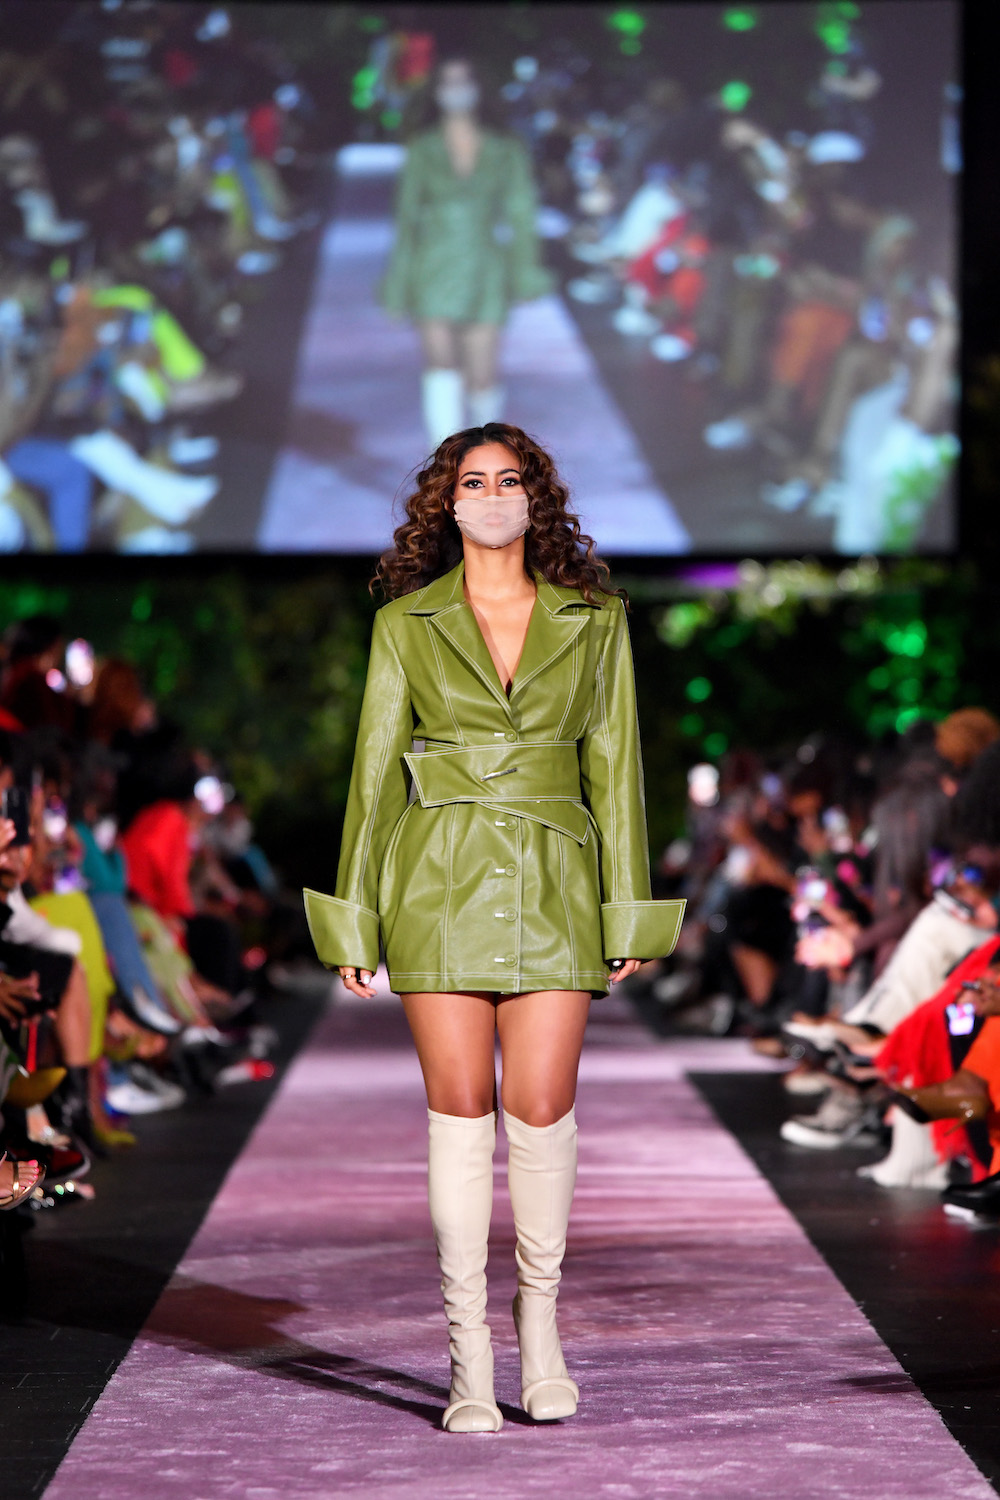 Anifa Mvuemba, a New Face of Fashion